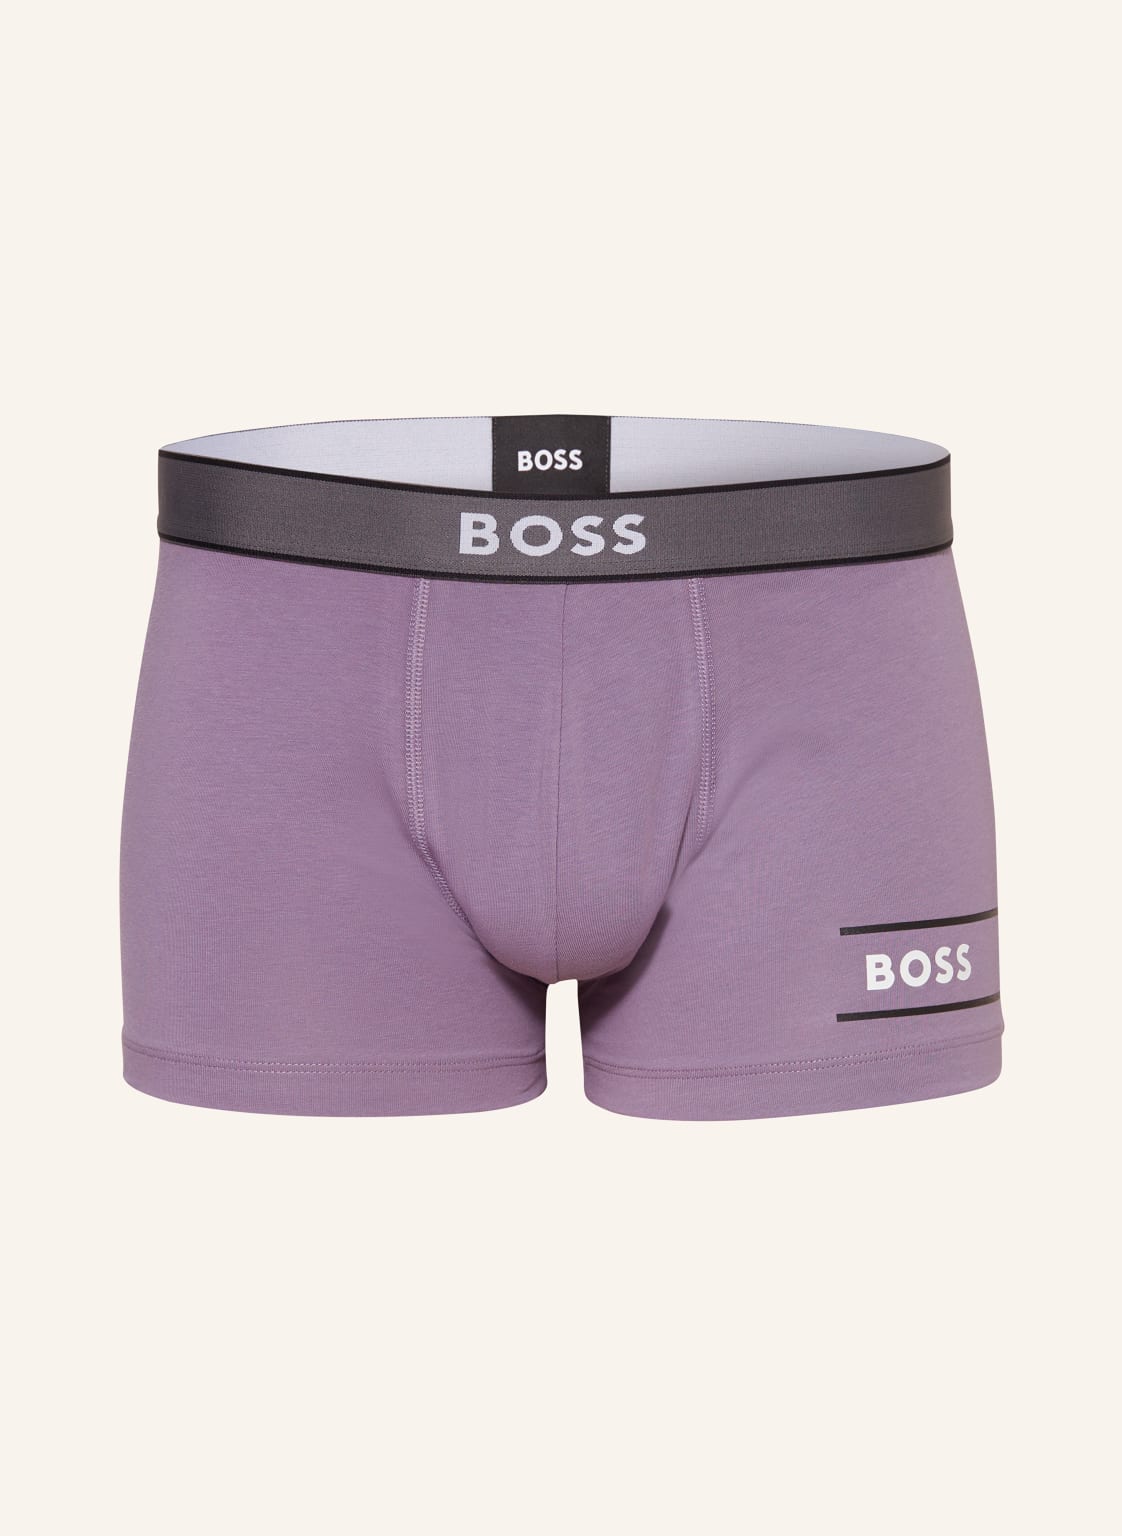 Boss Boxershorts lila von Boss